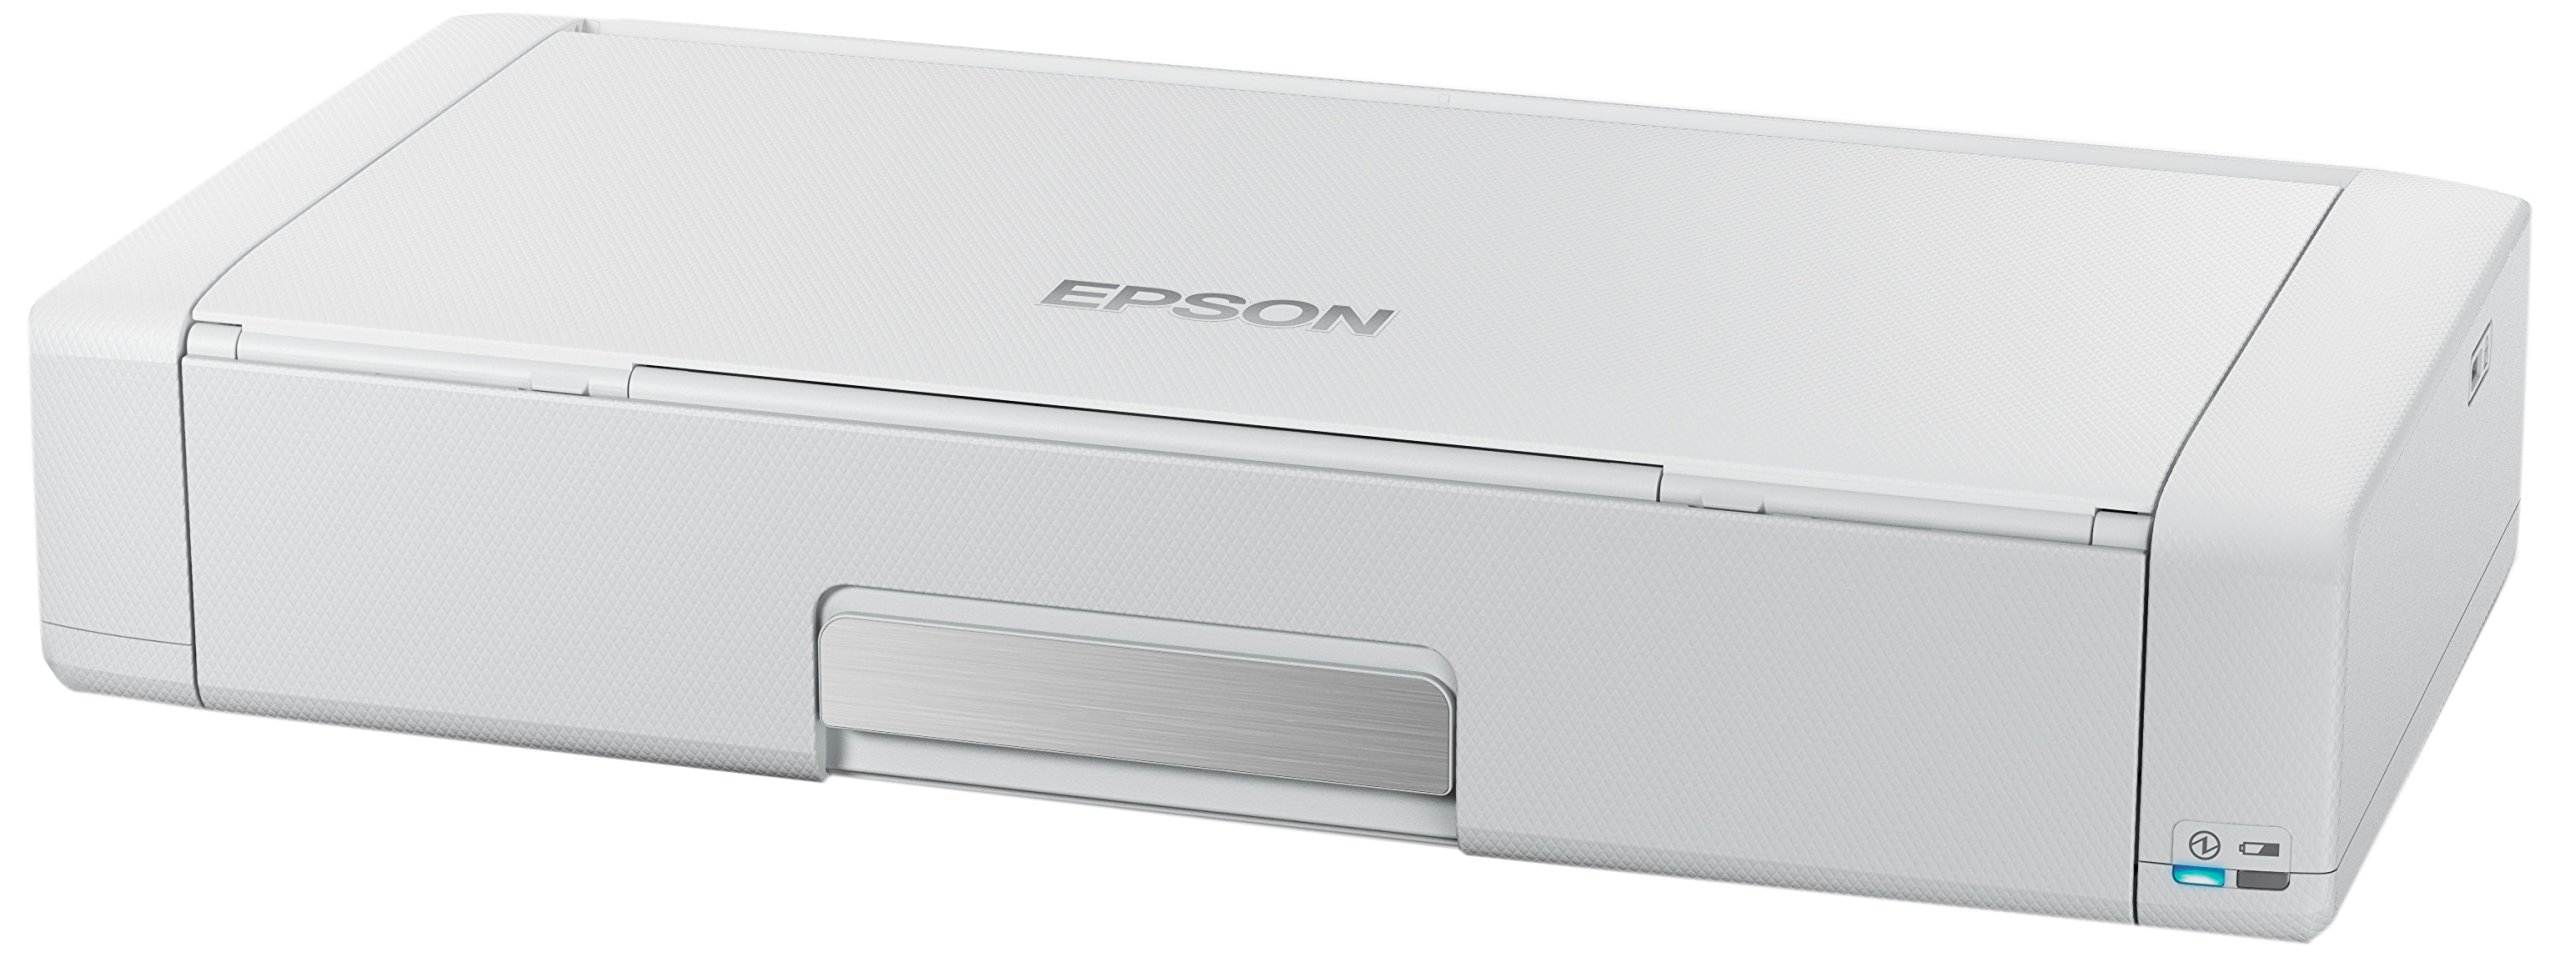 EPSON A4モバイルインクジェットプリンター PX-S05W ホワイト 無線 スマートフォンプリント Wi-Fi Direct